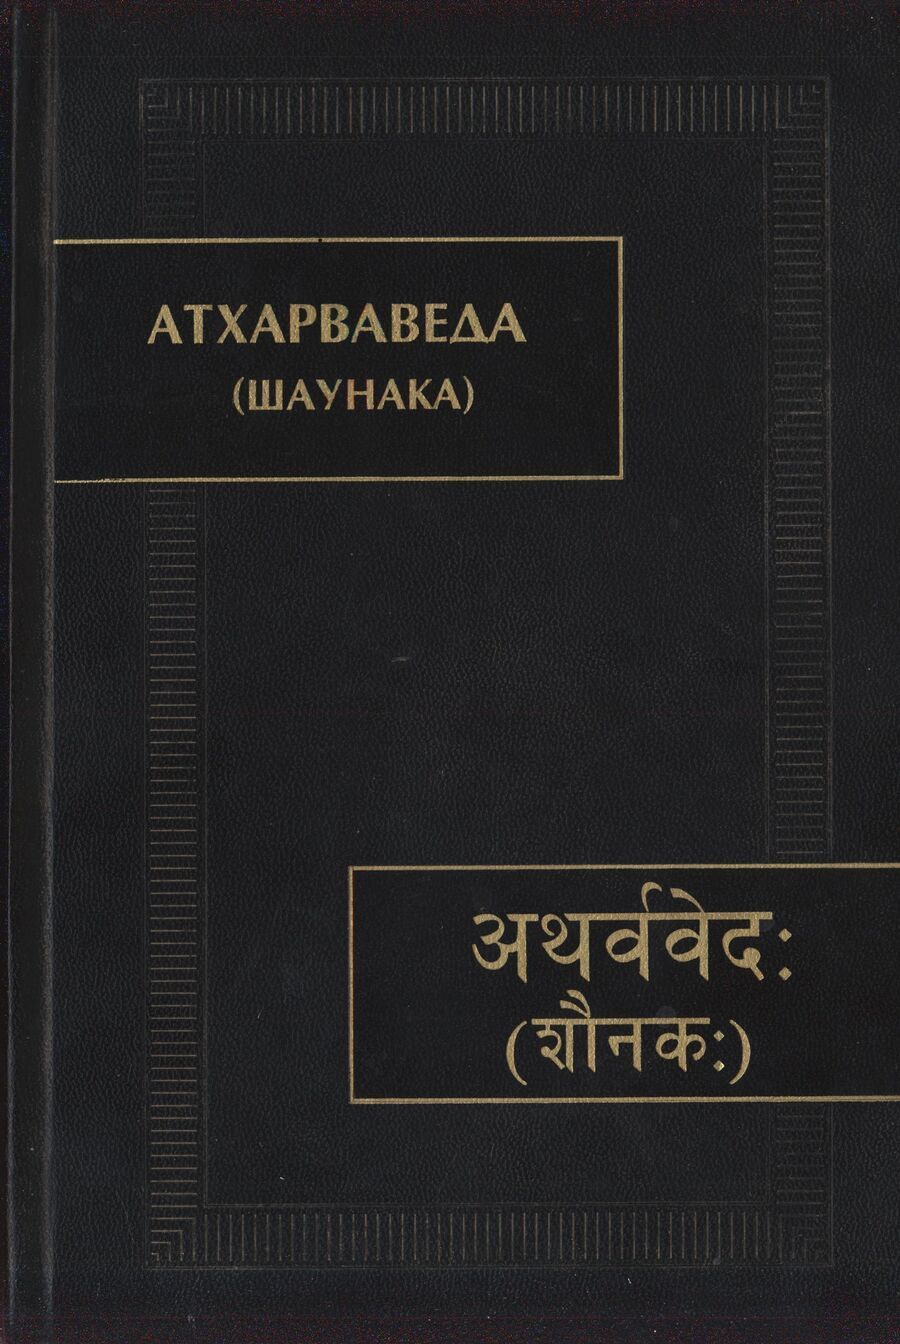 Обложка книги "Атхарваведа. Шаунака"